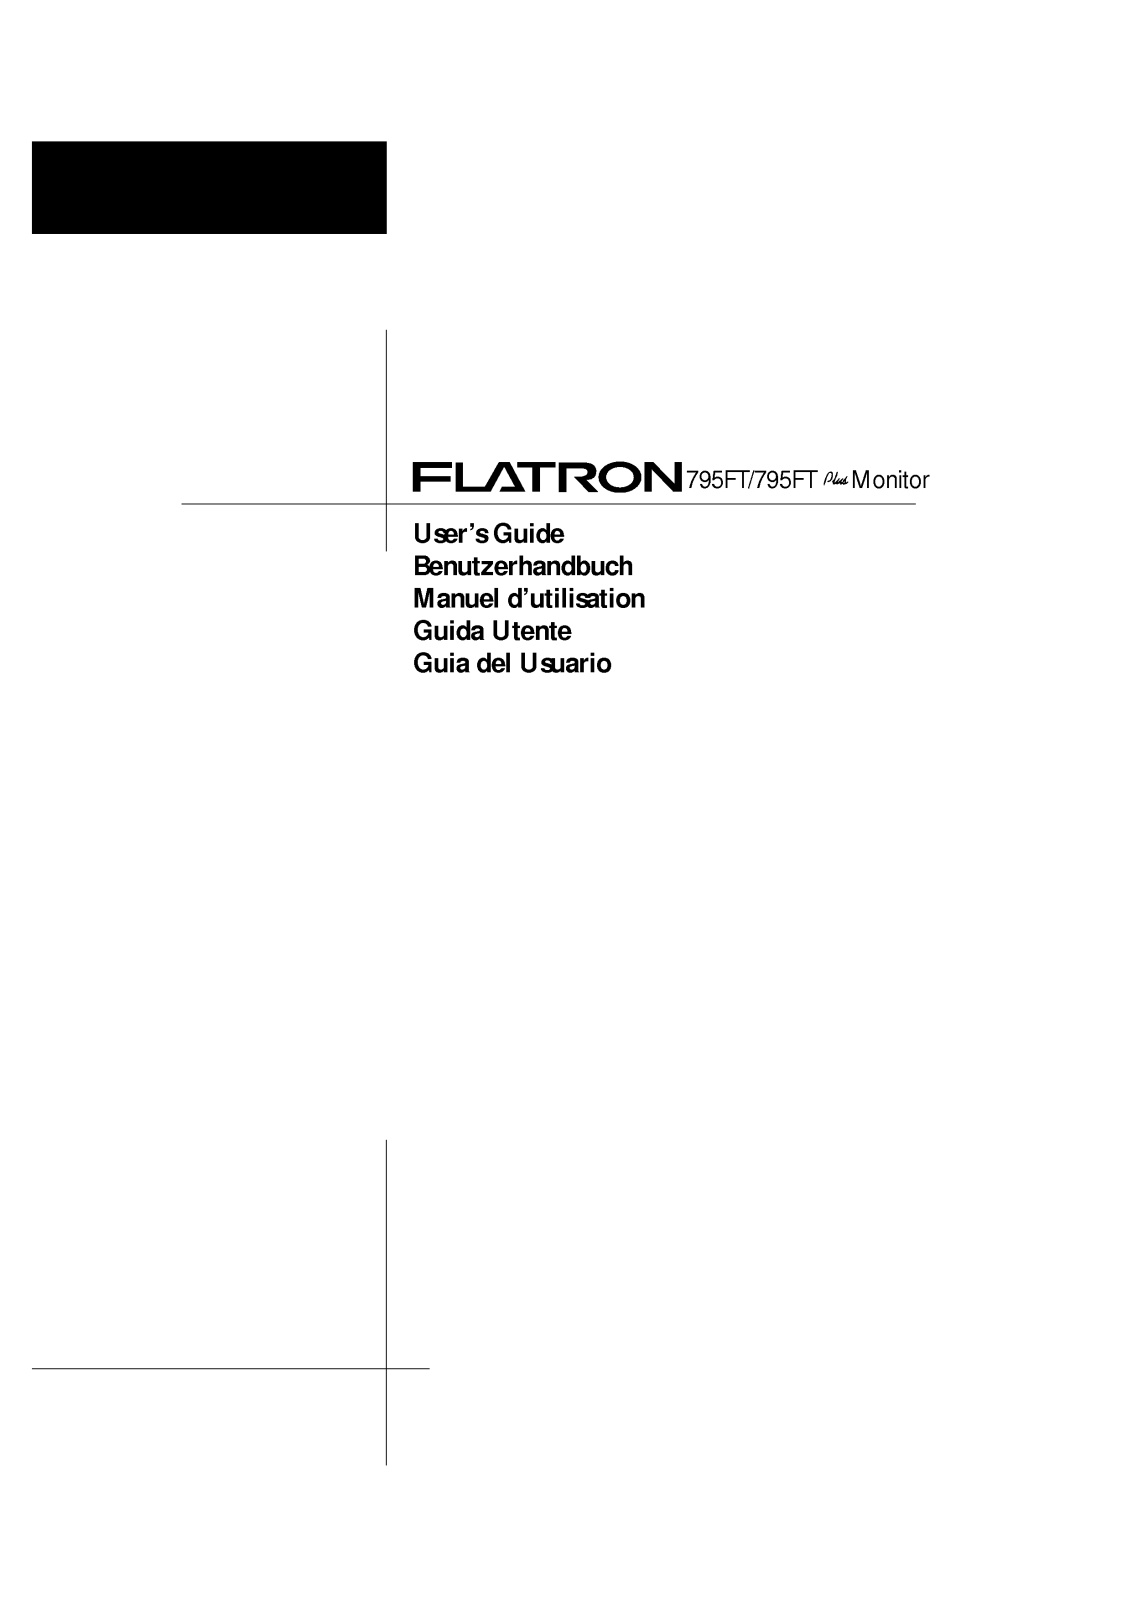 LG FLATRON 795FT-FB795BE, FLATRON 795FT PLUS-FB795B User Manual